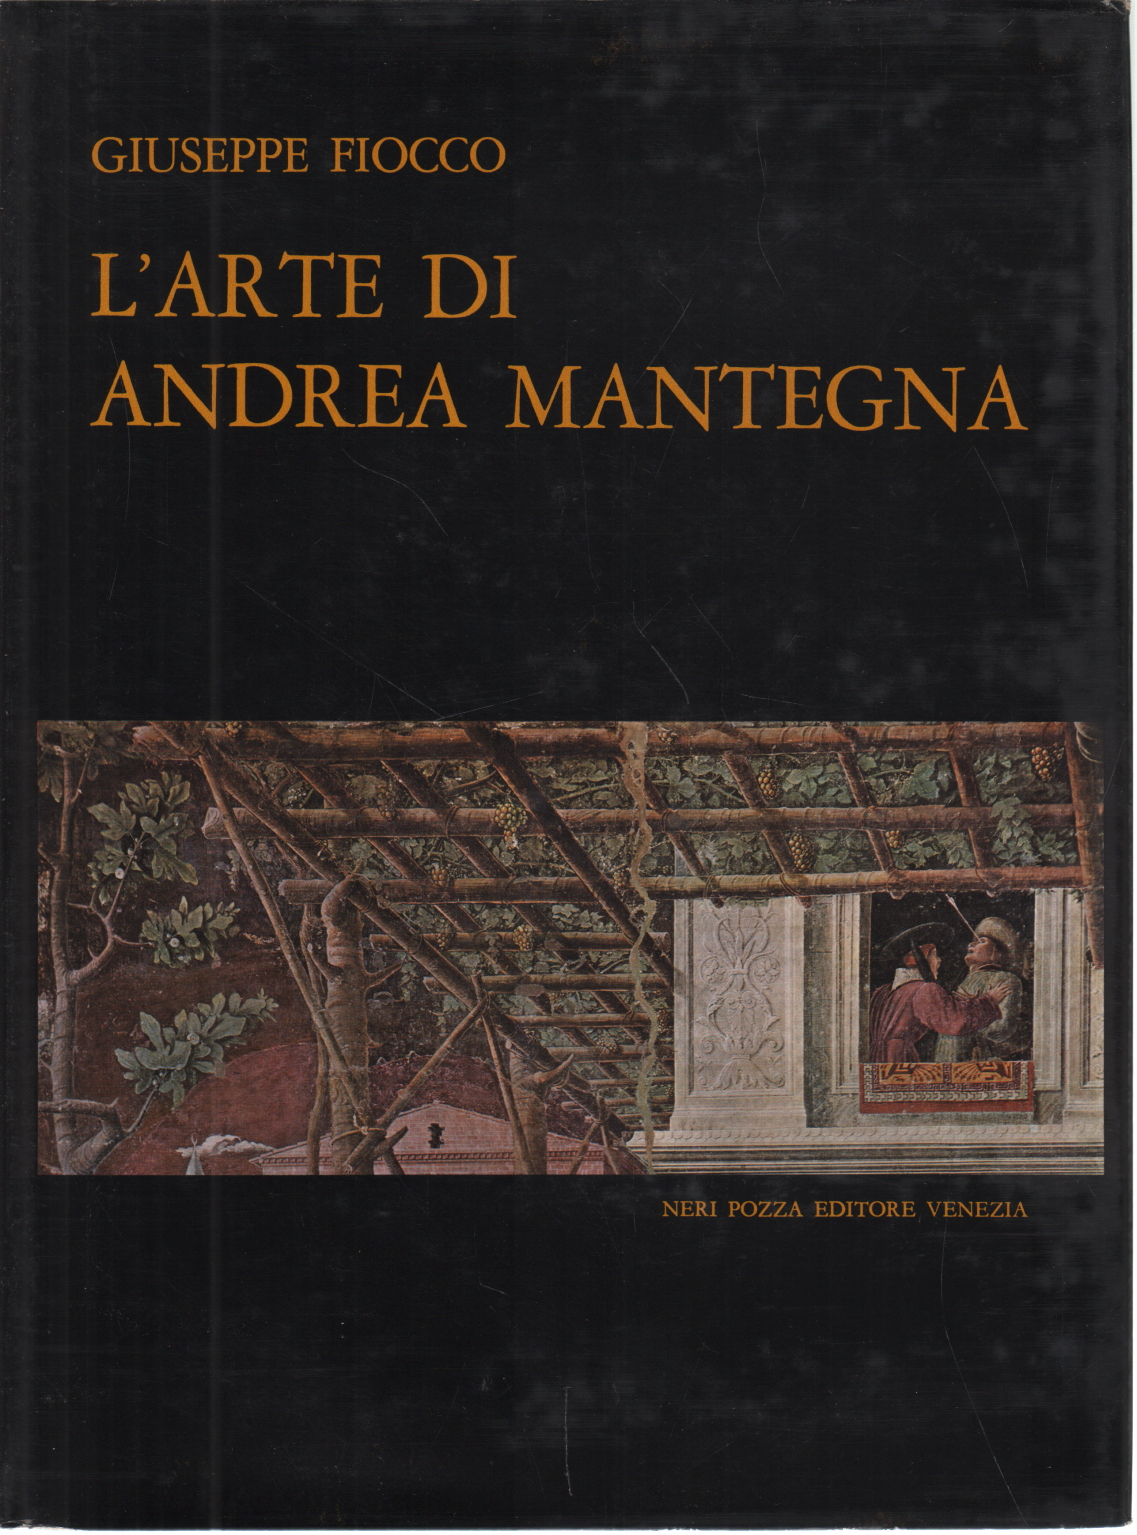 El arte de Andrea Mantegna, José Arco